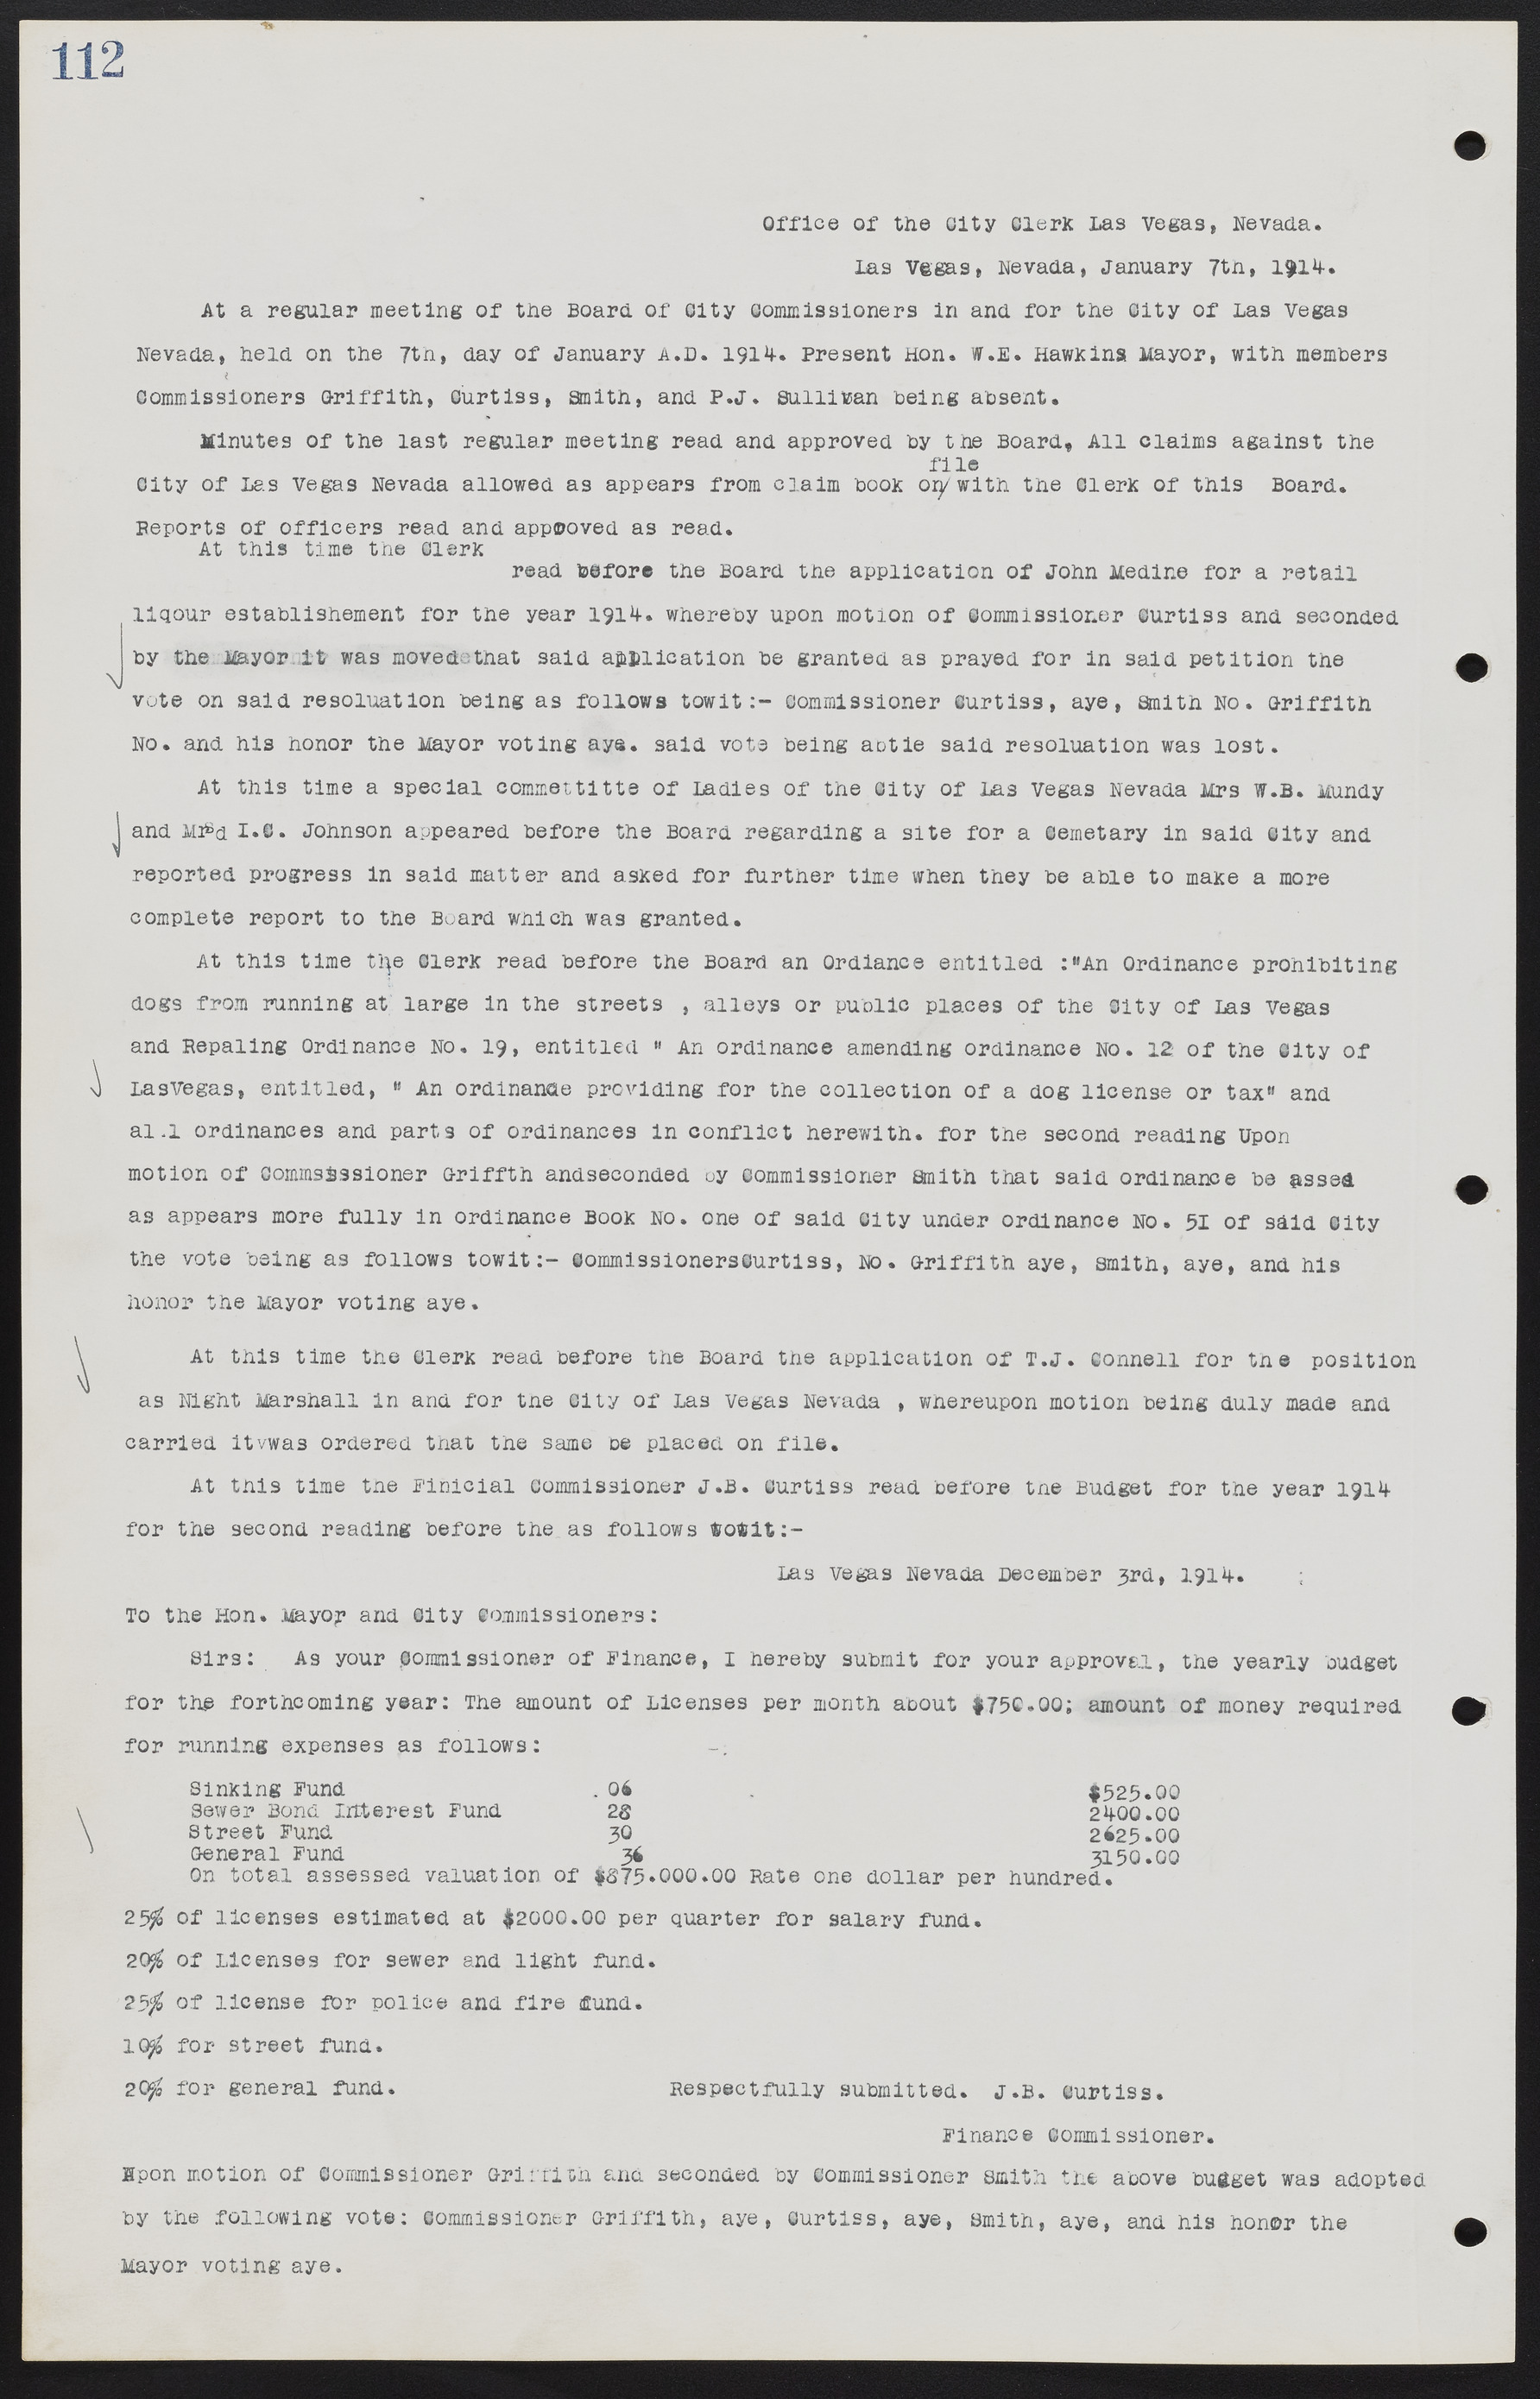 Las Vegas City Commission Minutes, June 22, 1911 to February 7, 1922, lvc000001-126